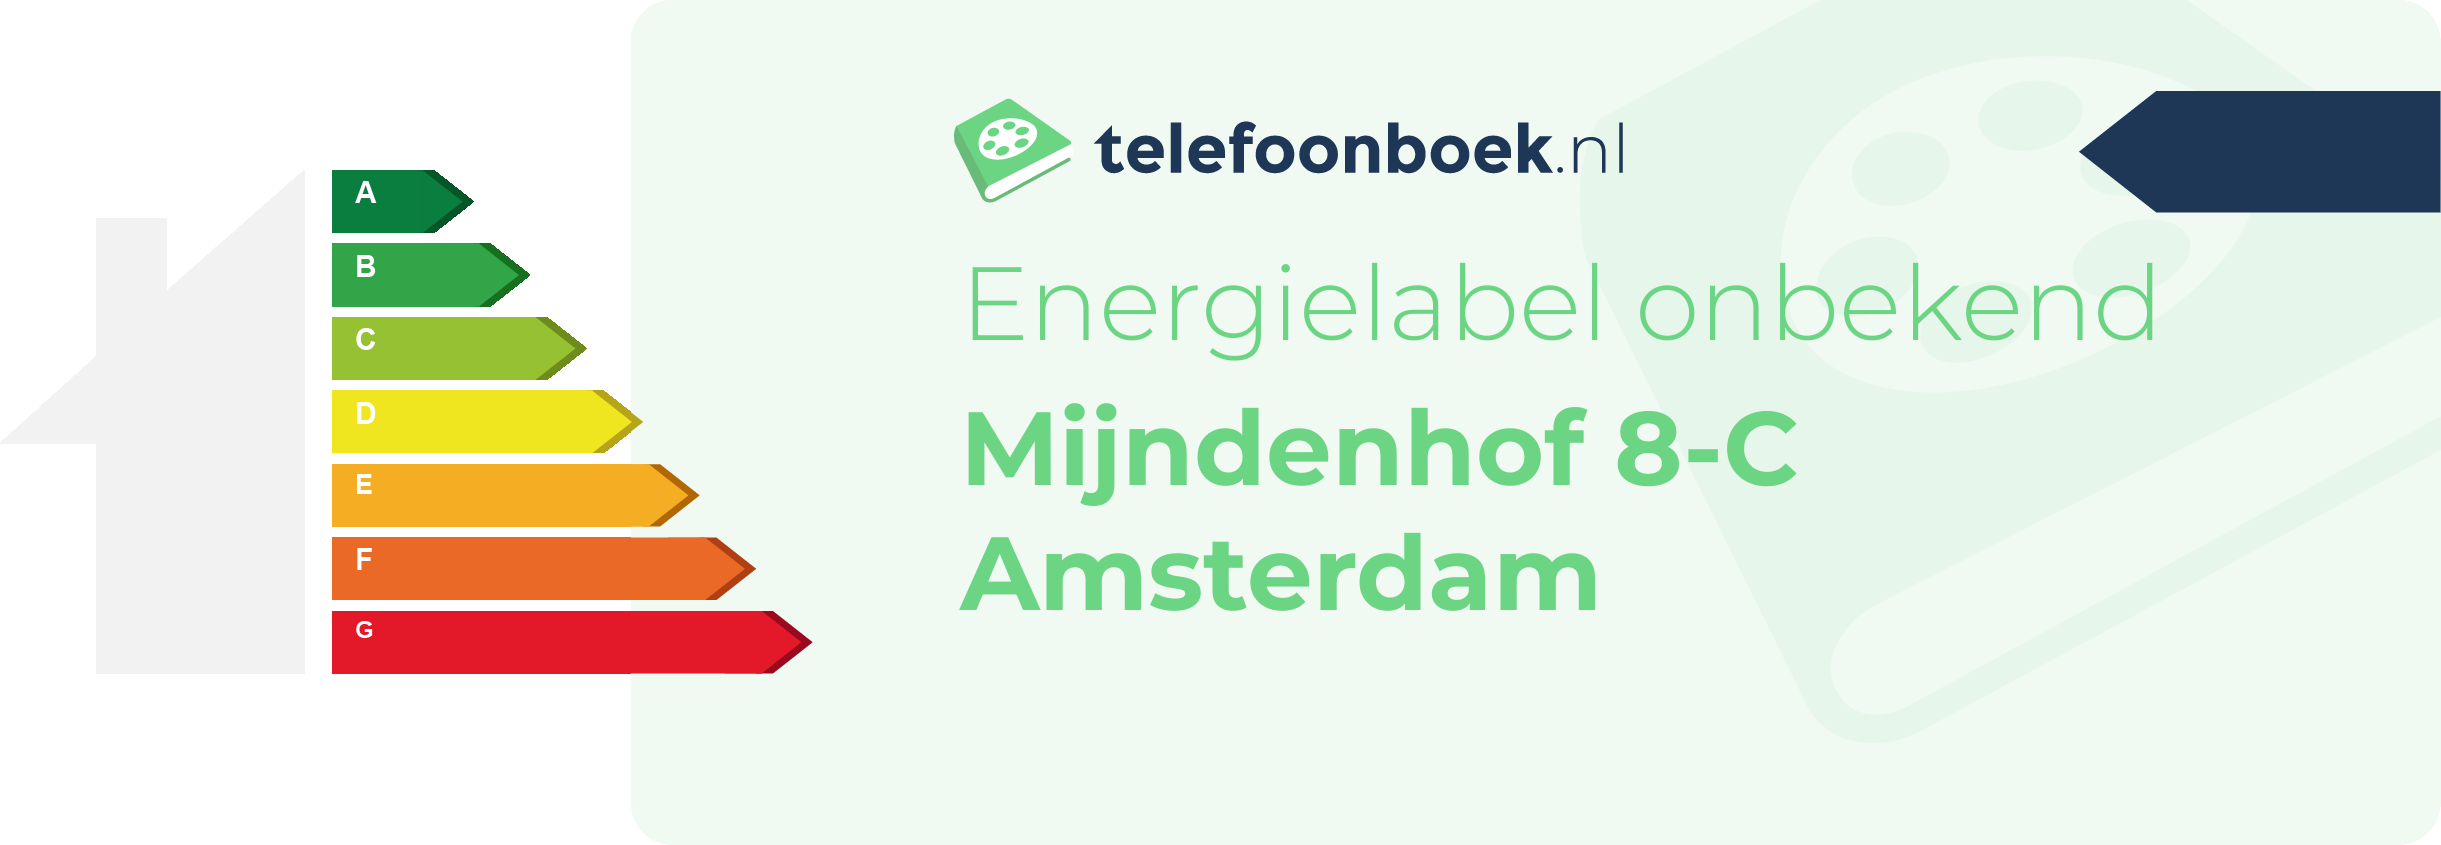 Energielabel Mijndenhof 8-C Amsterdam